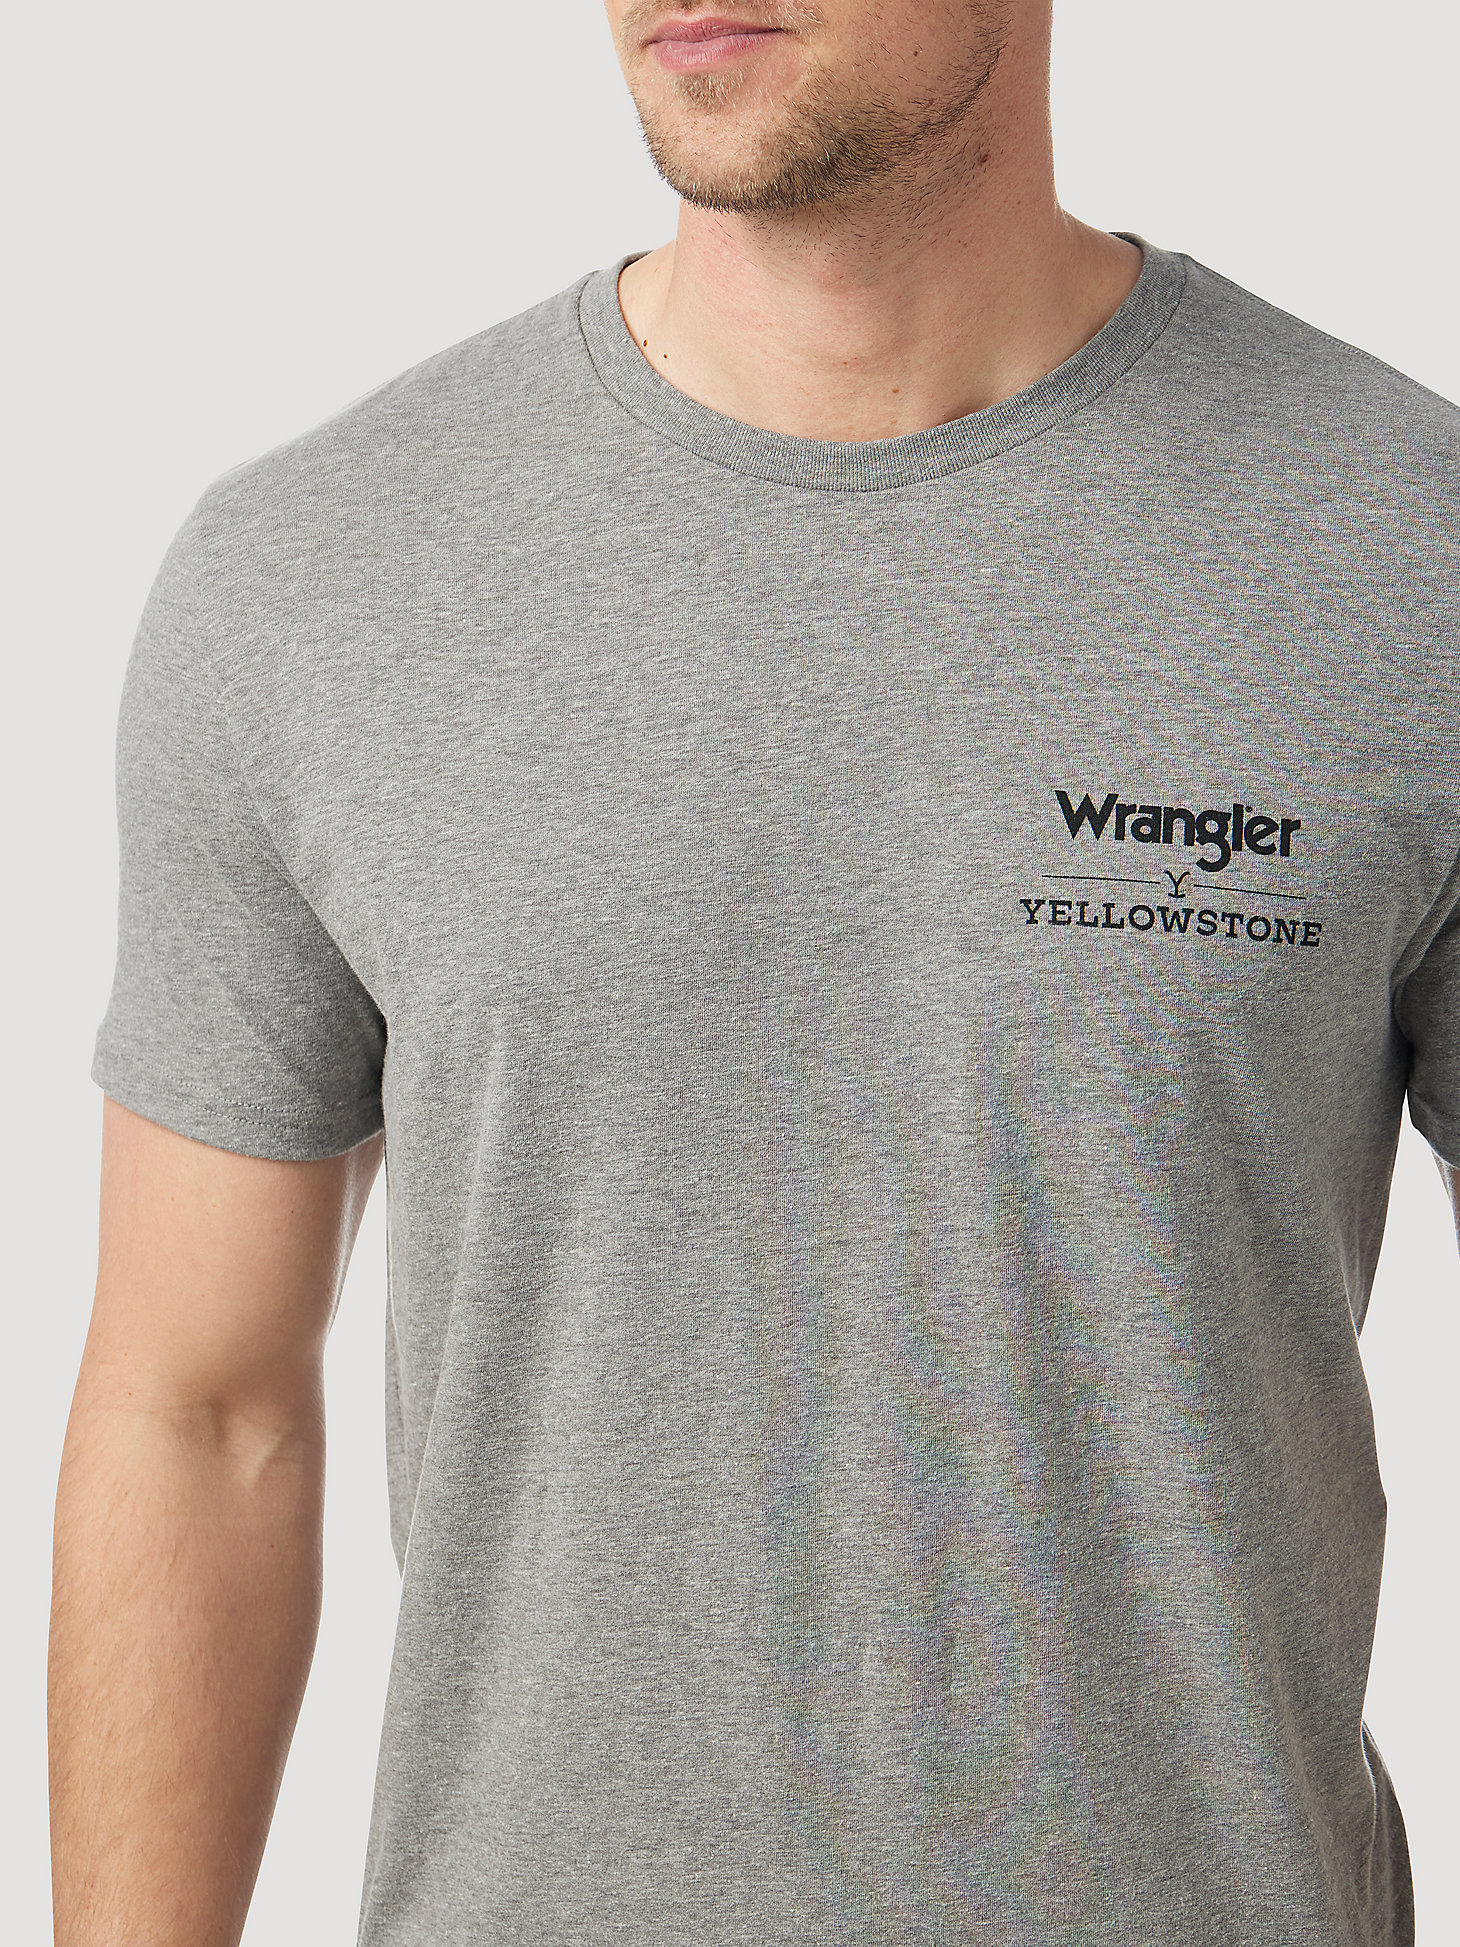 Wrangler x Yellowstone Men's Broken Rock T-Shirt in Graphite Heather alternative view 2